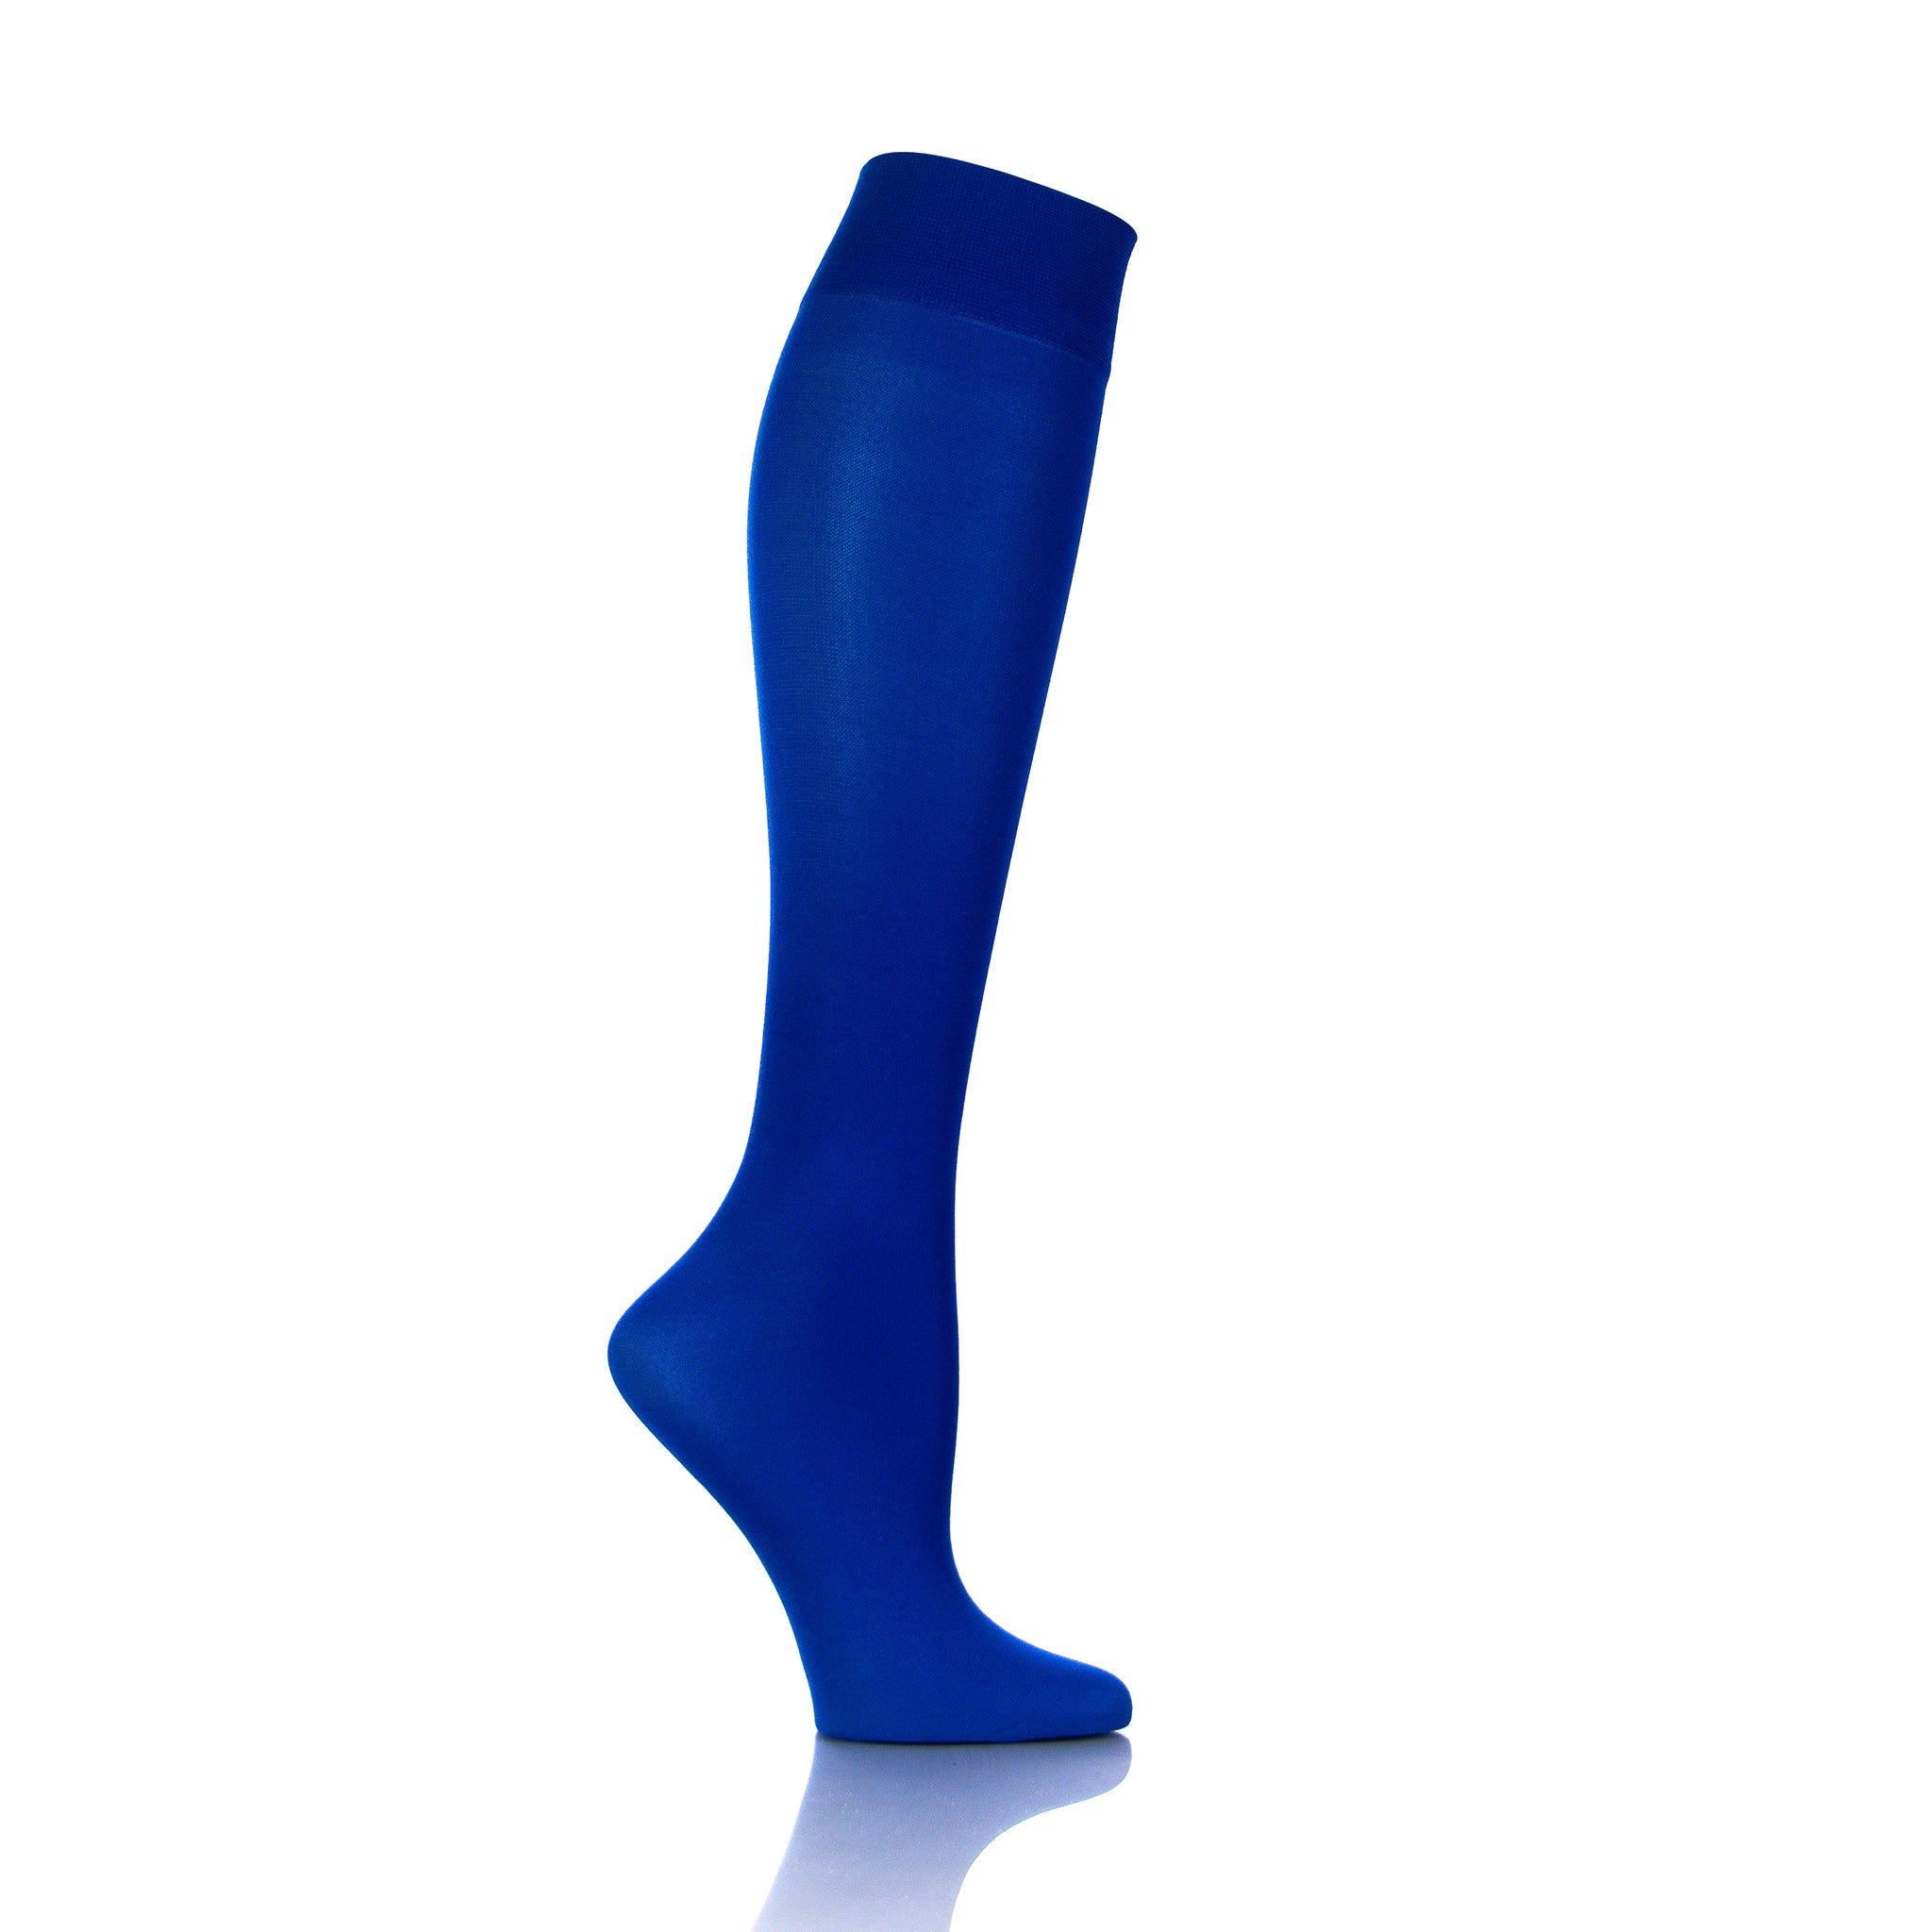 Womens Compression Hosiery - 20 30 mmHg - Knee High - Royal Blue Color - Softmedi - Inside Leg View